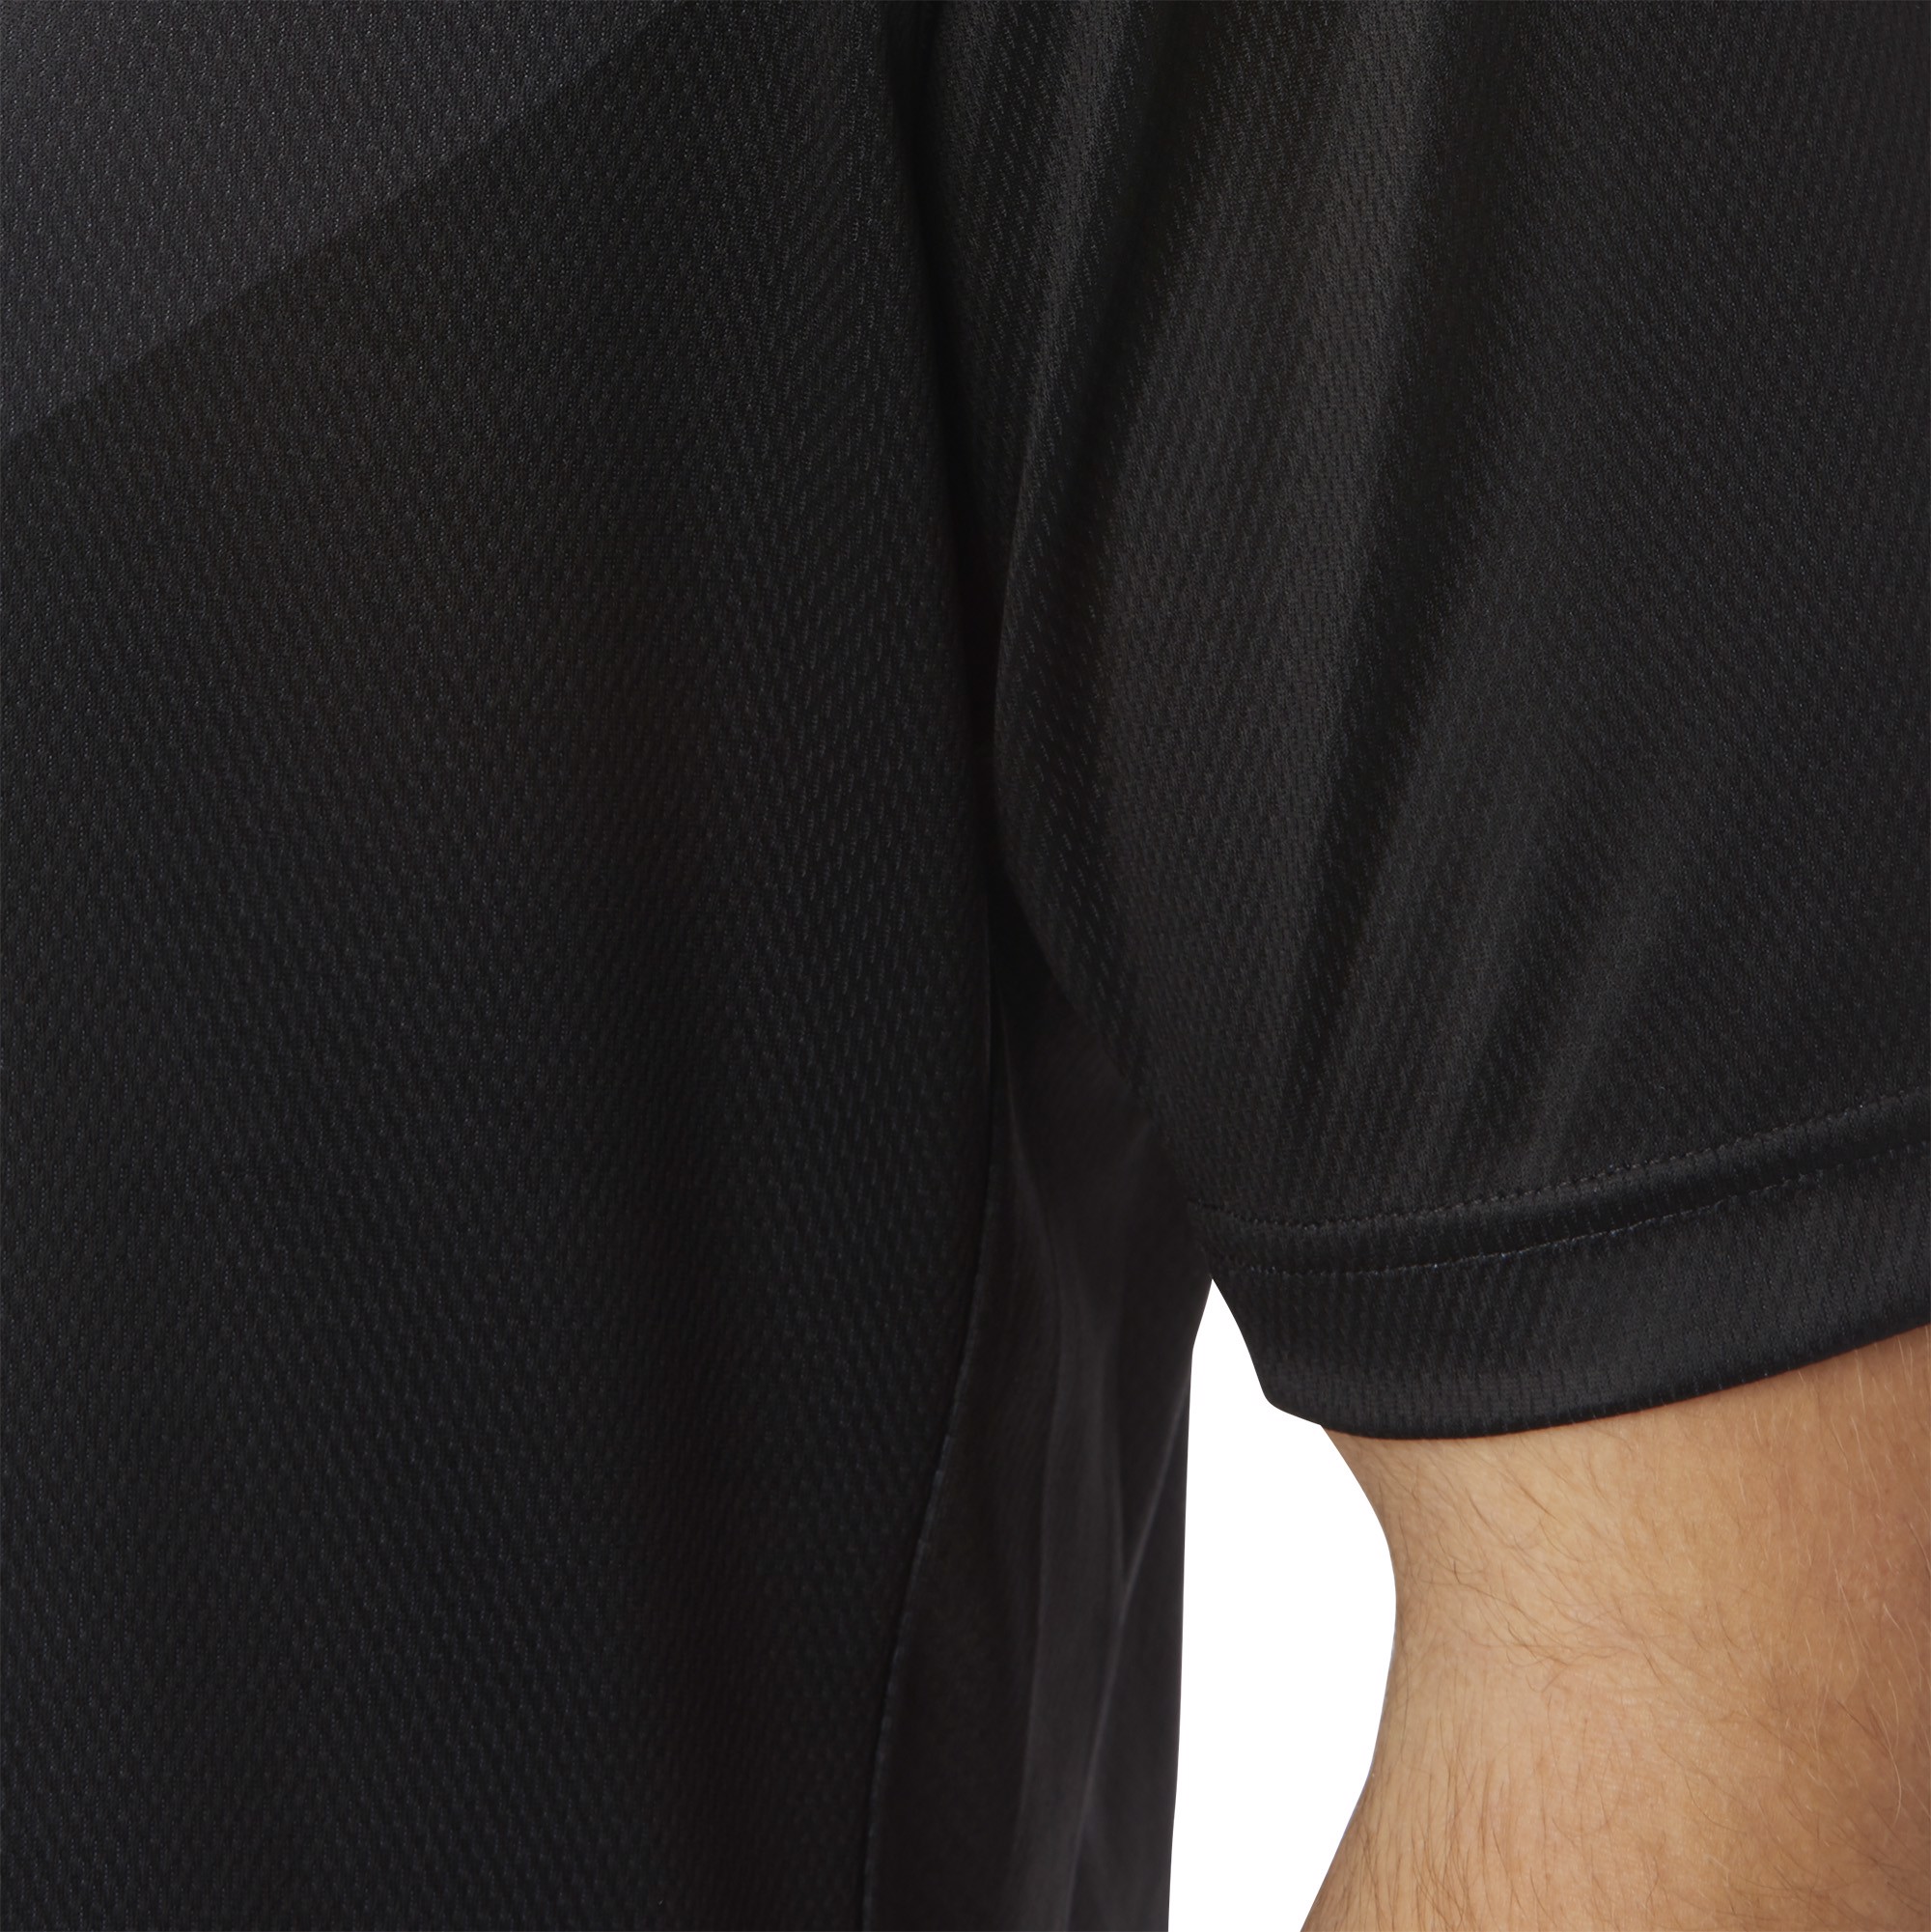 giro-roust-jersey-mens-dirt-apparel-black-charcoal-shadow-detail-1_master